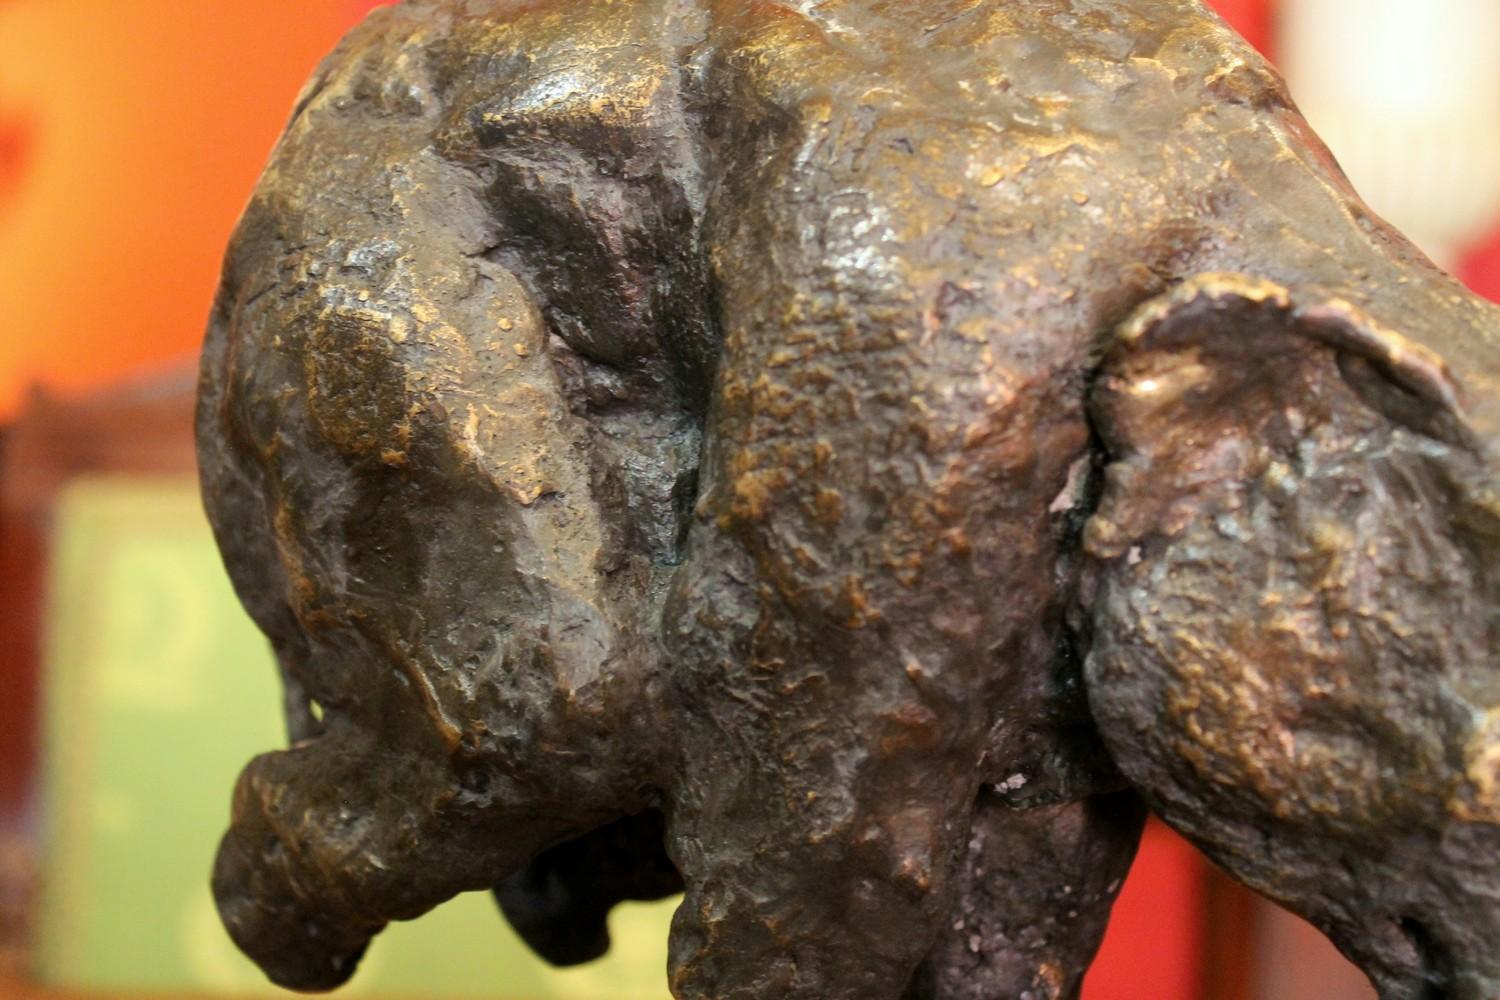 Elephant on Iron Pedestal, Lost Wax Casting Parcel-Gilt Patina Bronze Sculpture 15